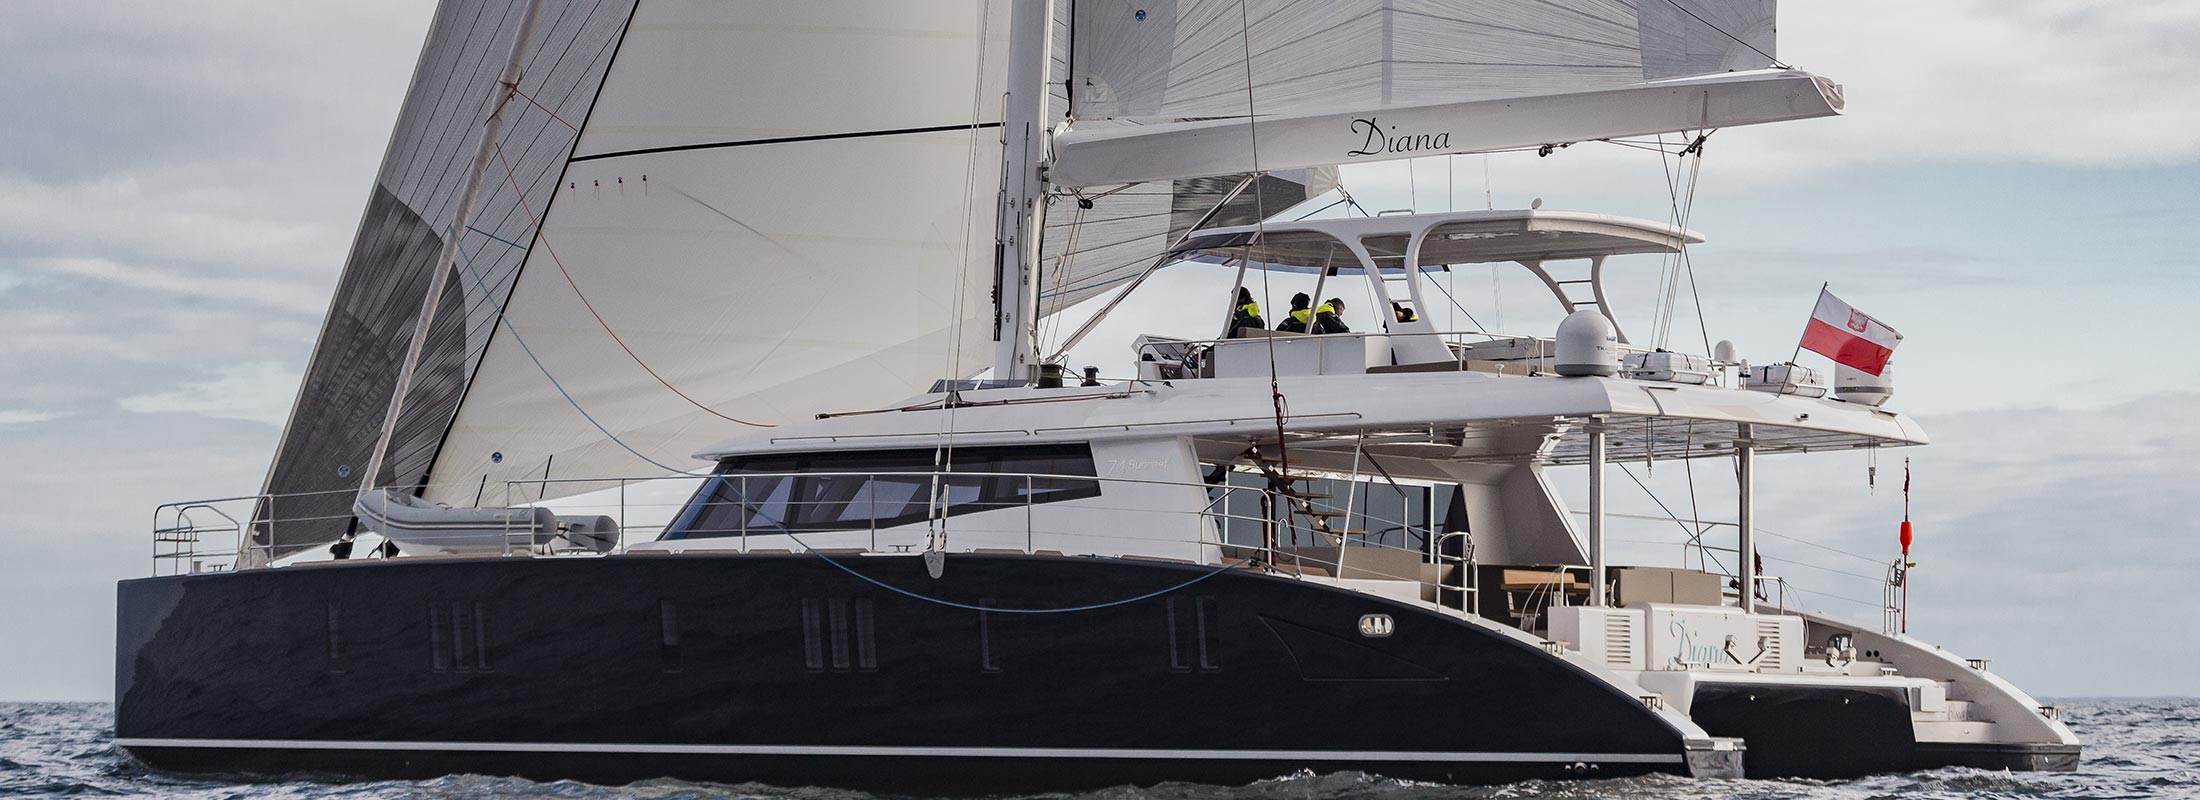 Diana-sailing-catamaran-charter-a-yacht-slider-1.jpg